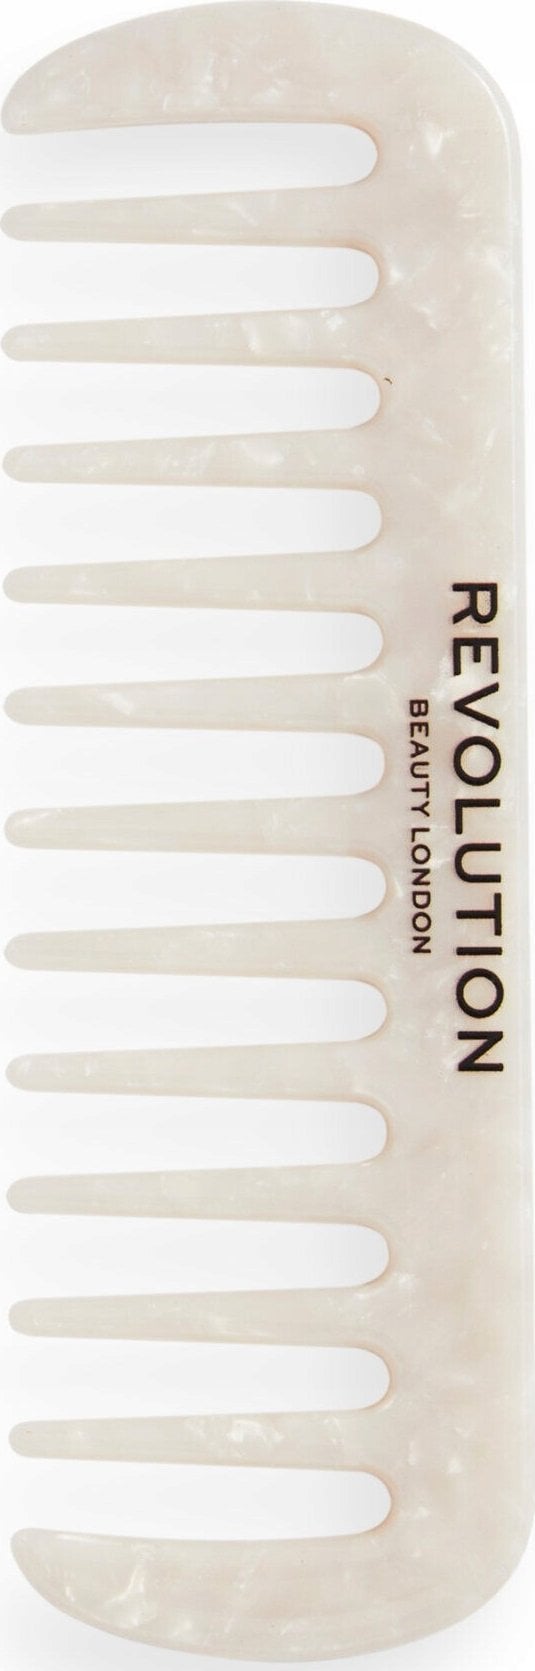 MAKE UP REVOLUTION Revolution Haircare Natural Curl Wide Tooth Comb White Grzebień do włosów kręconych 1szt